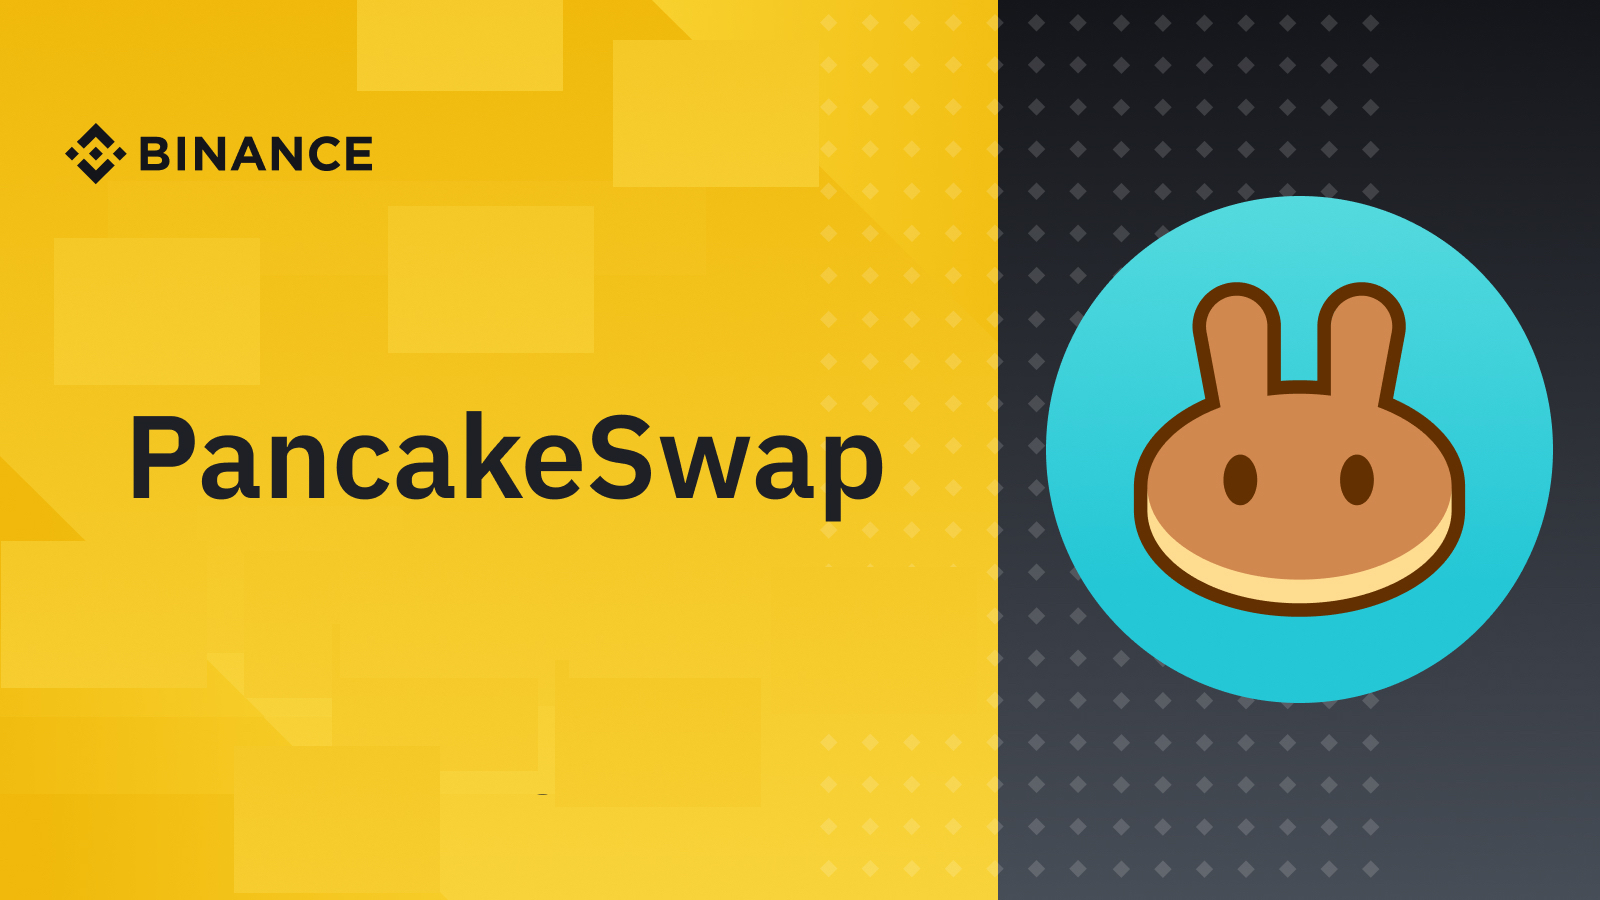 Binance Mini Program PancakeSwap